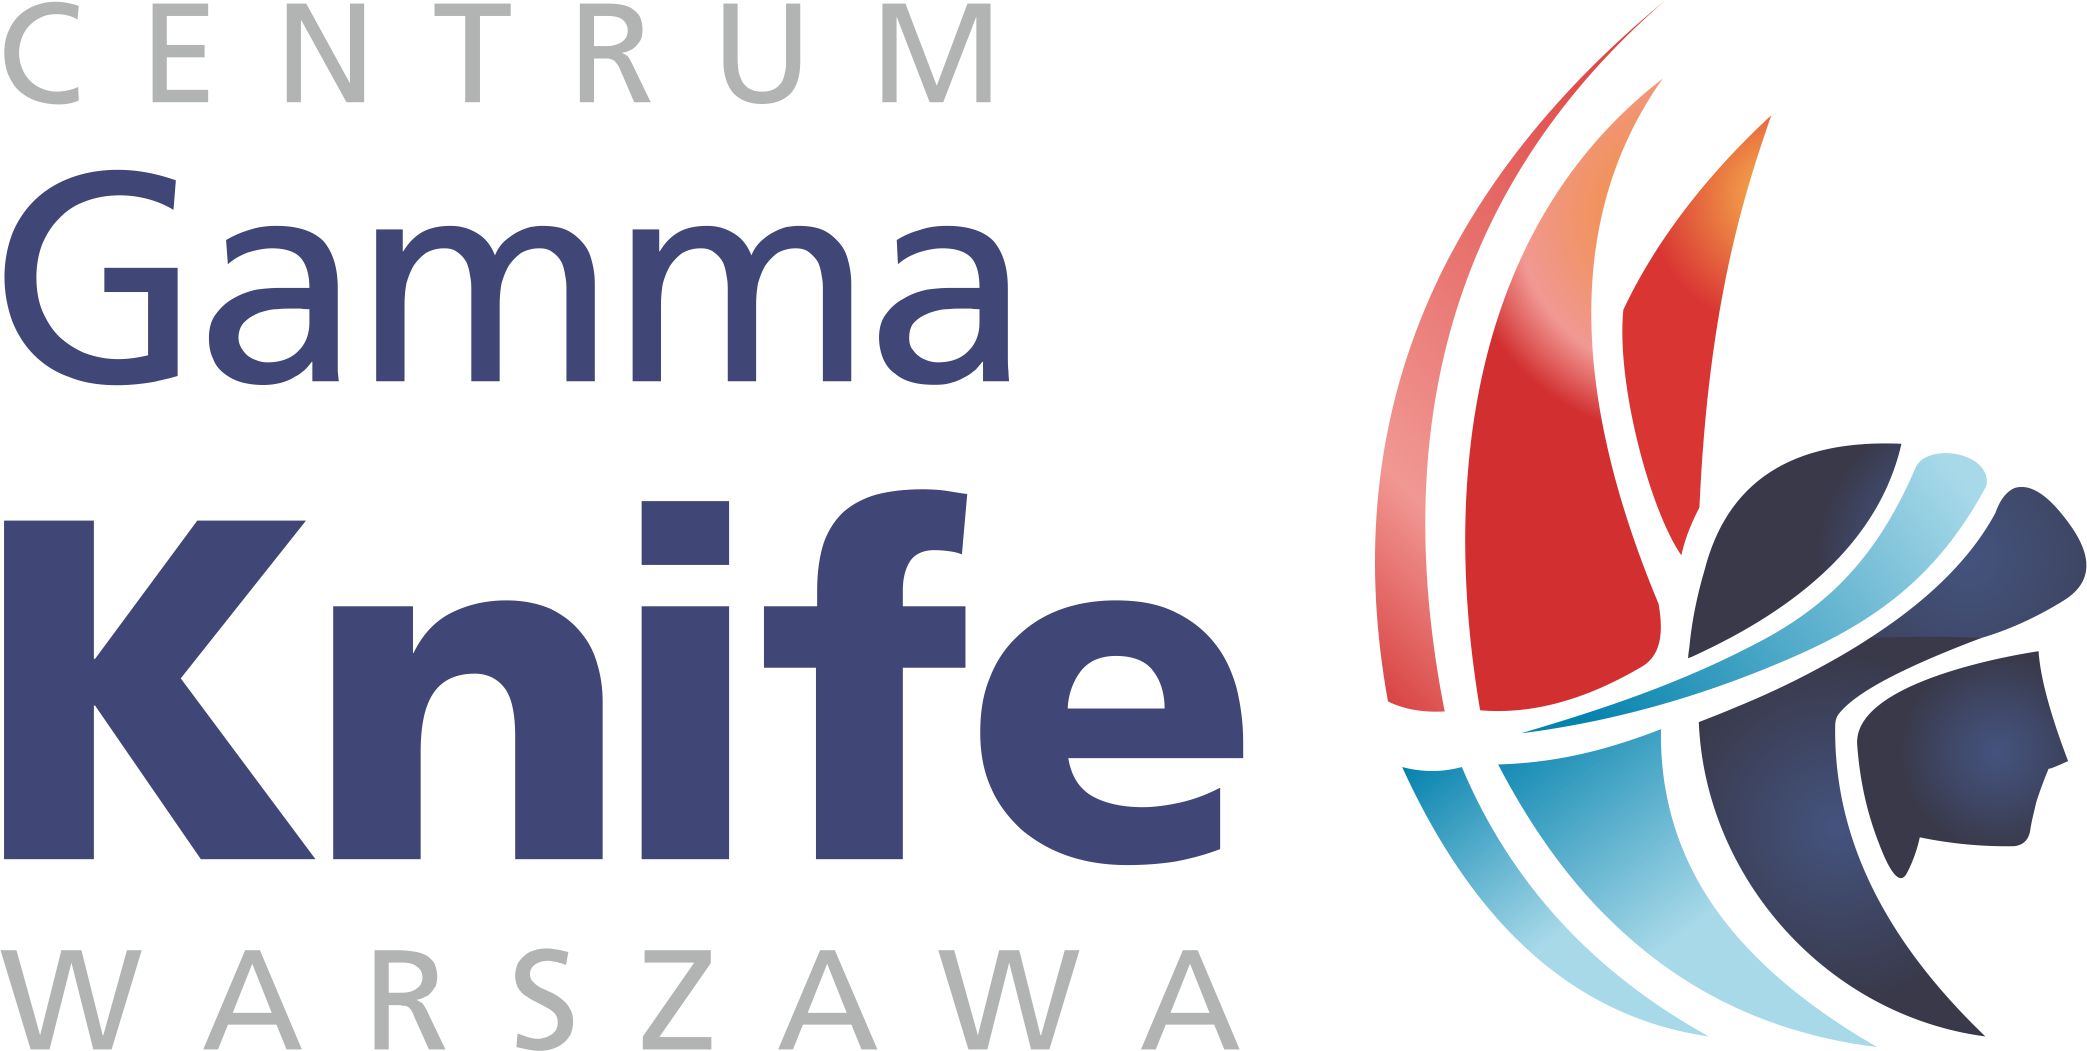 Logo Centrum Gamma Knife